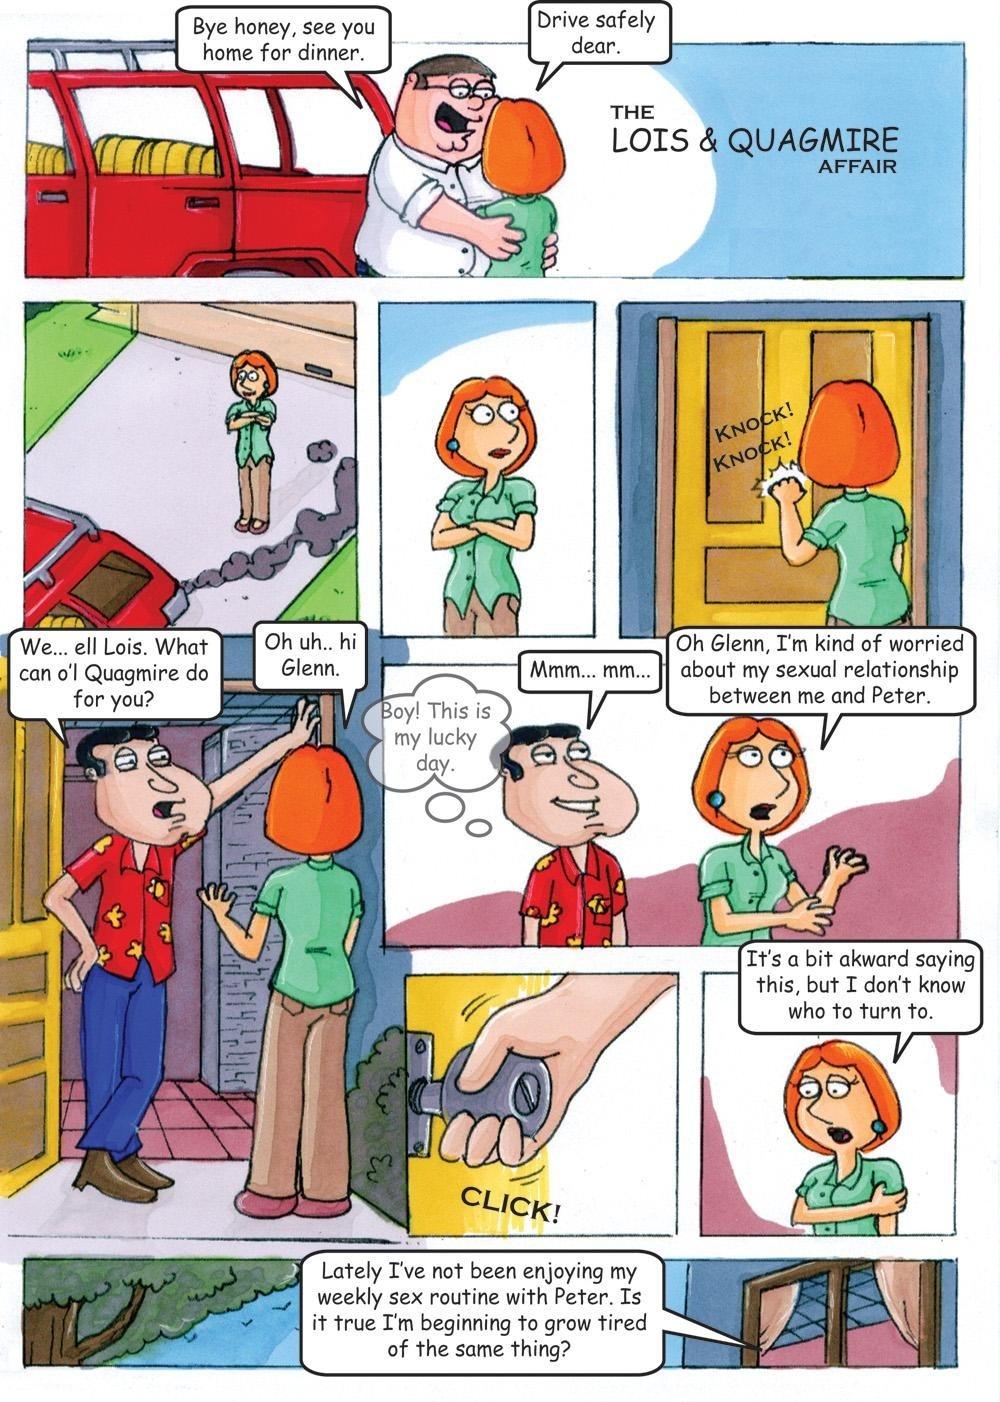 Lois i bagno sprawa (family guy)